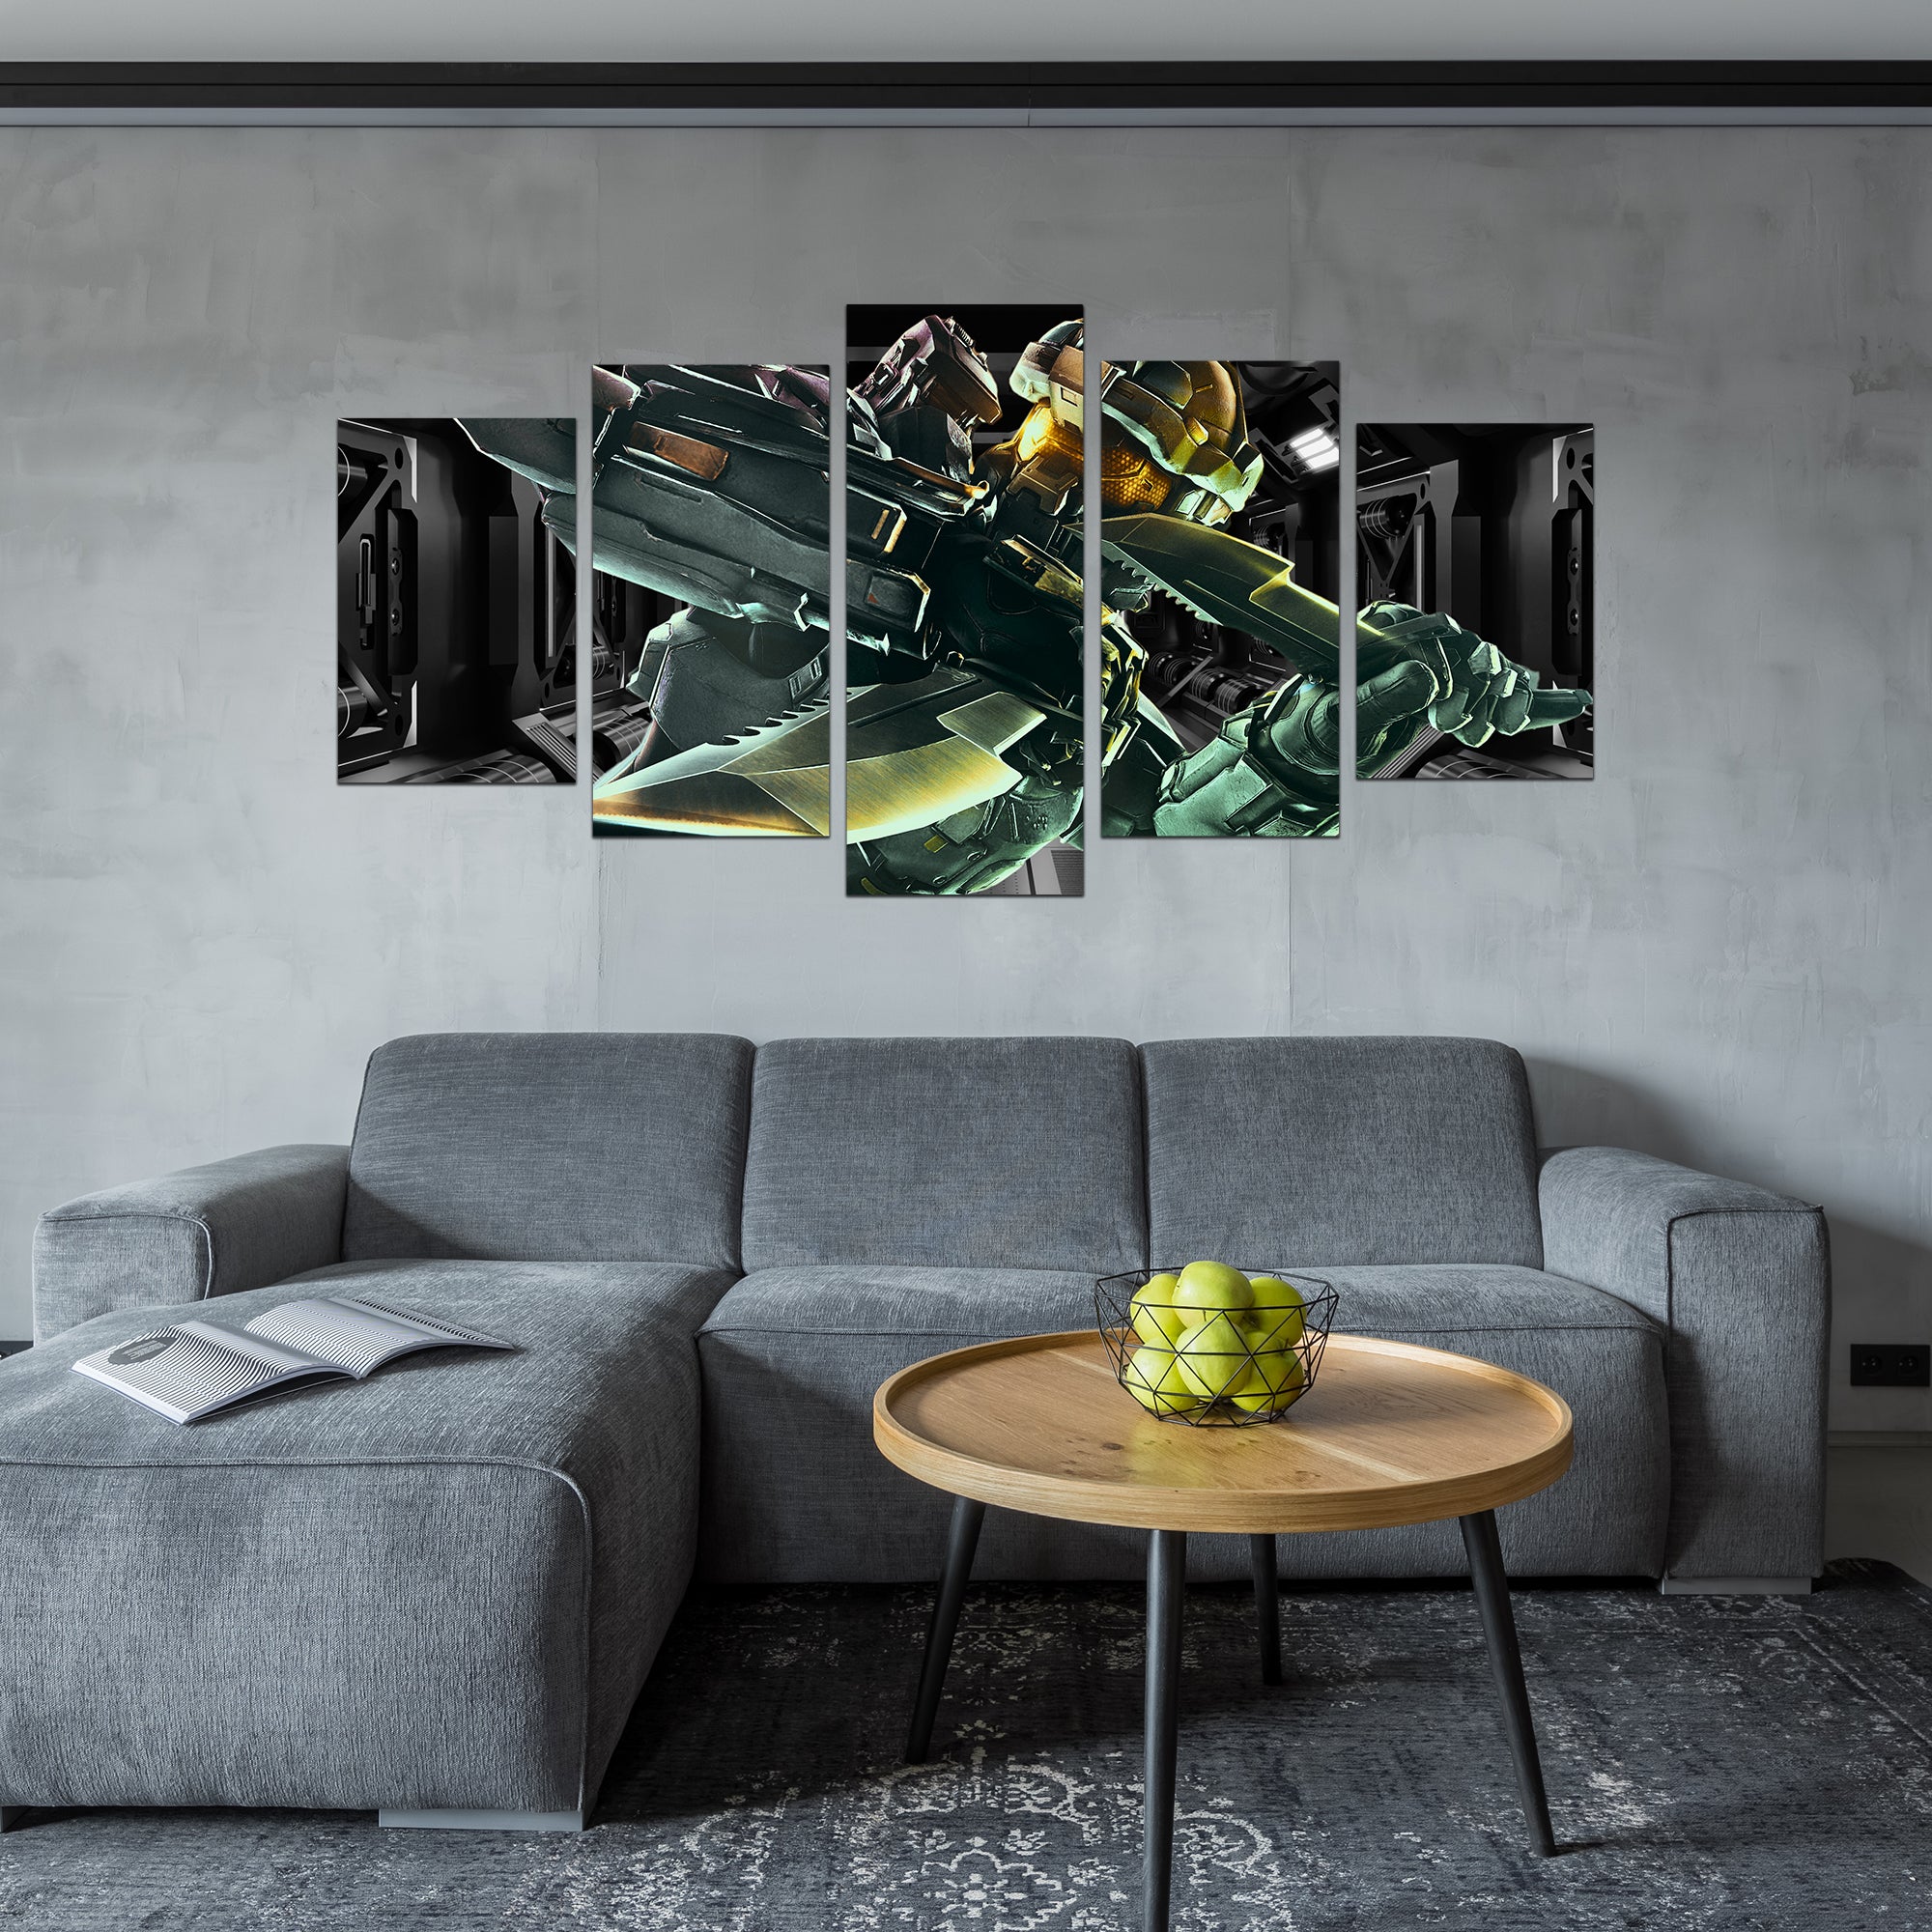 Halo Wall Canvas Set - Elegant Design, Durable Canvas Material